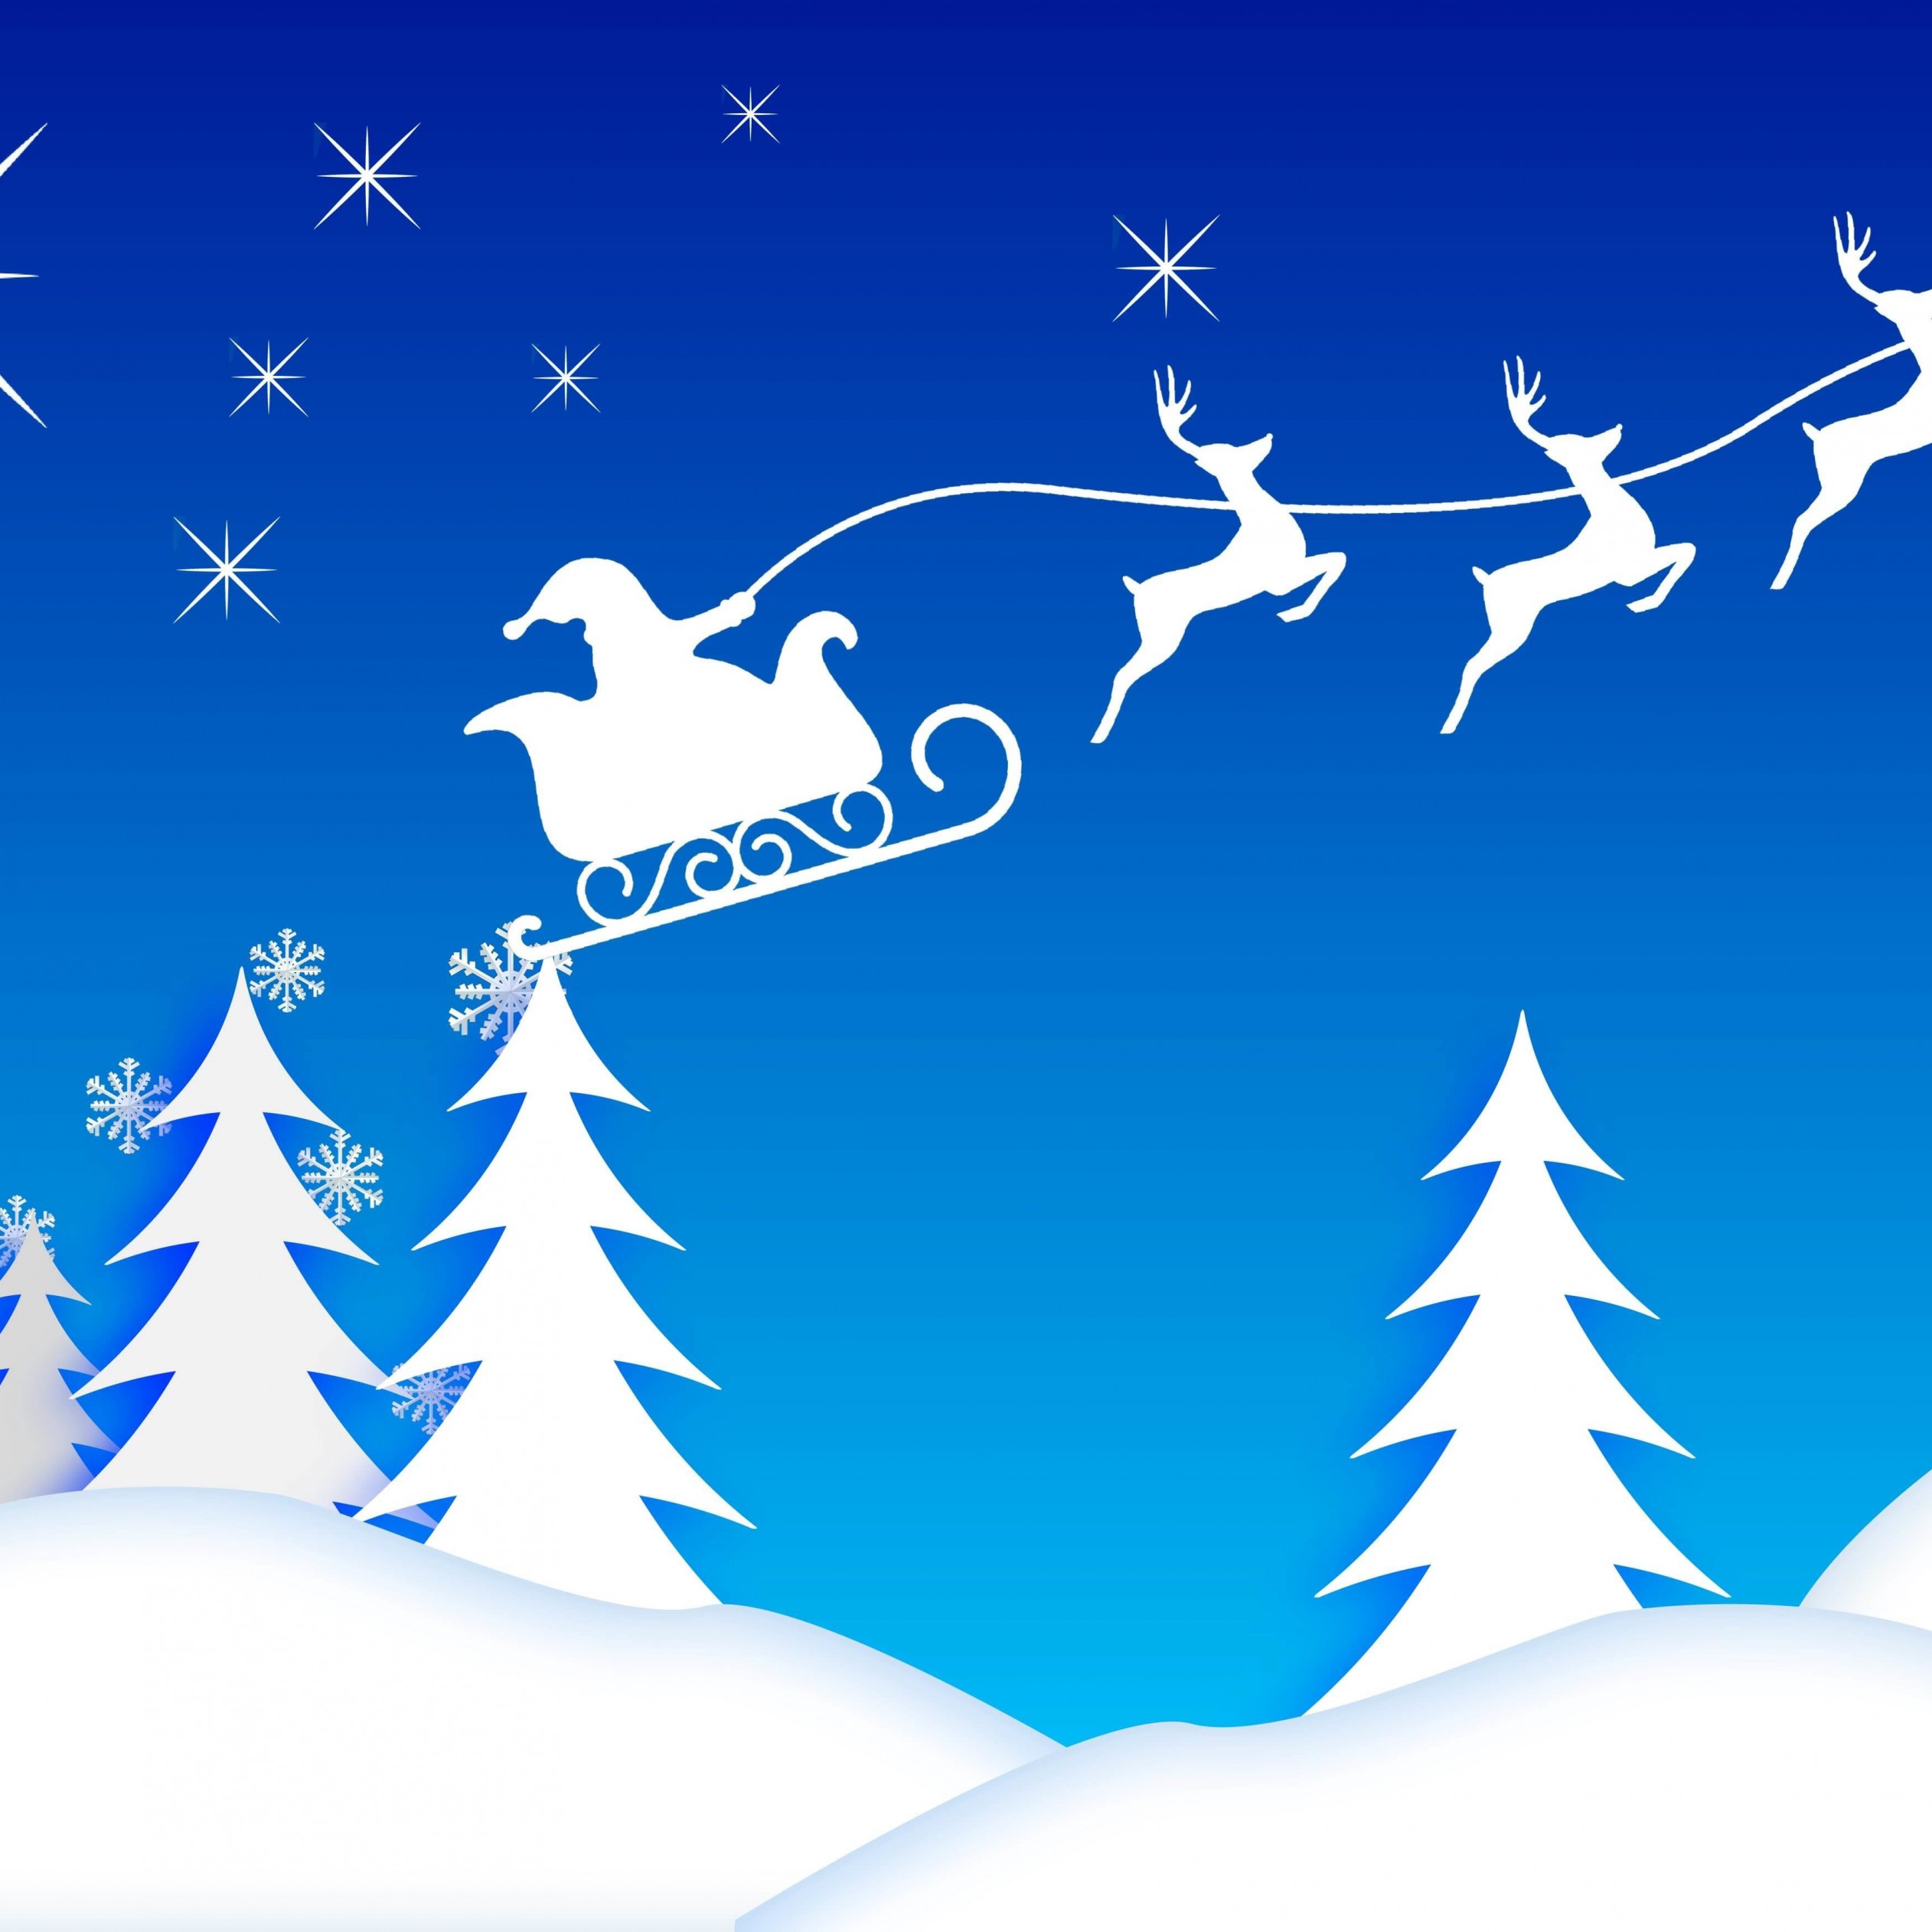 Santa’s Sleigh Illustration Wallpaper for Apple iPad 3